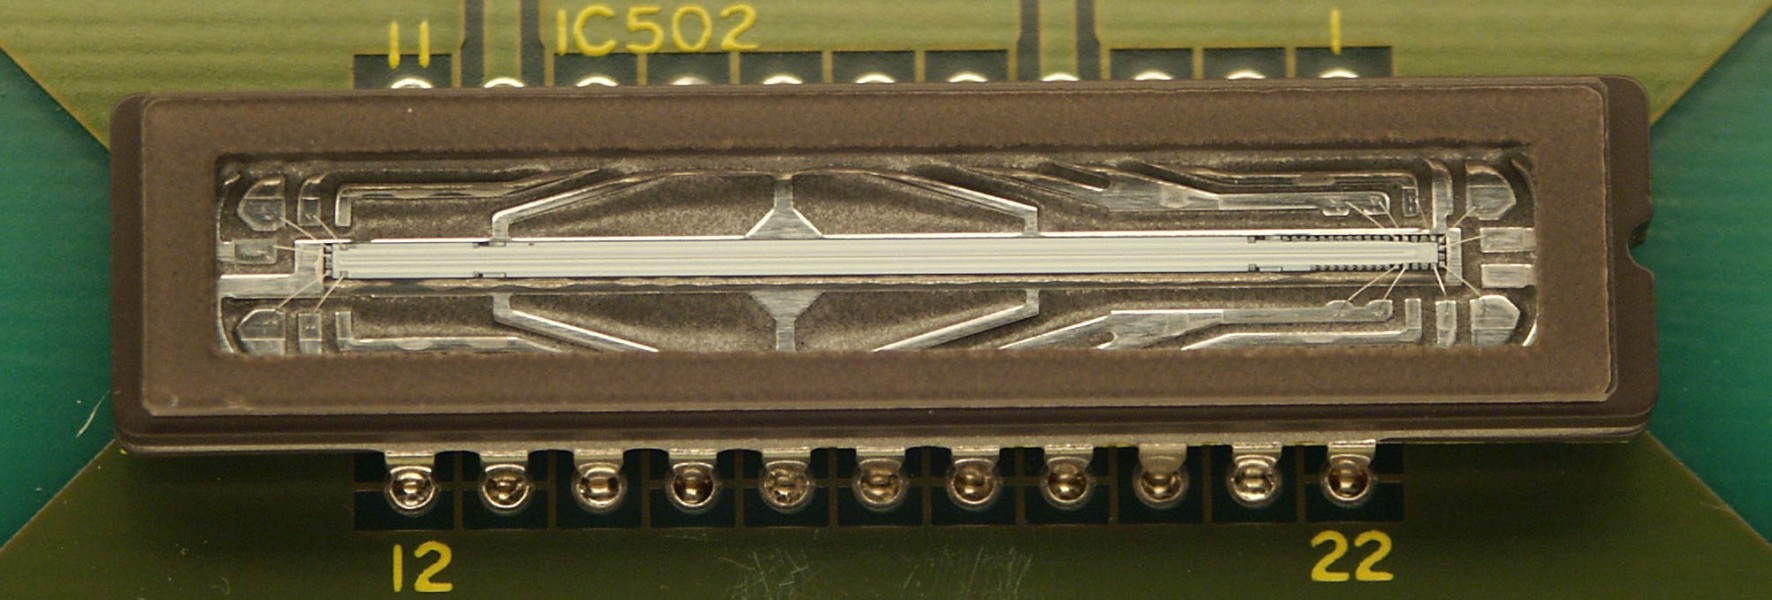 CCD line sensor